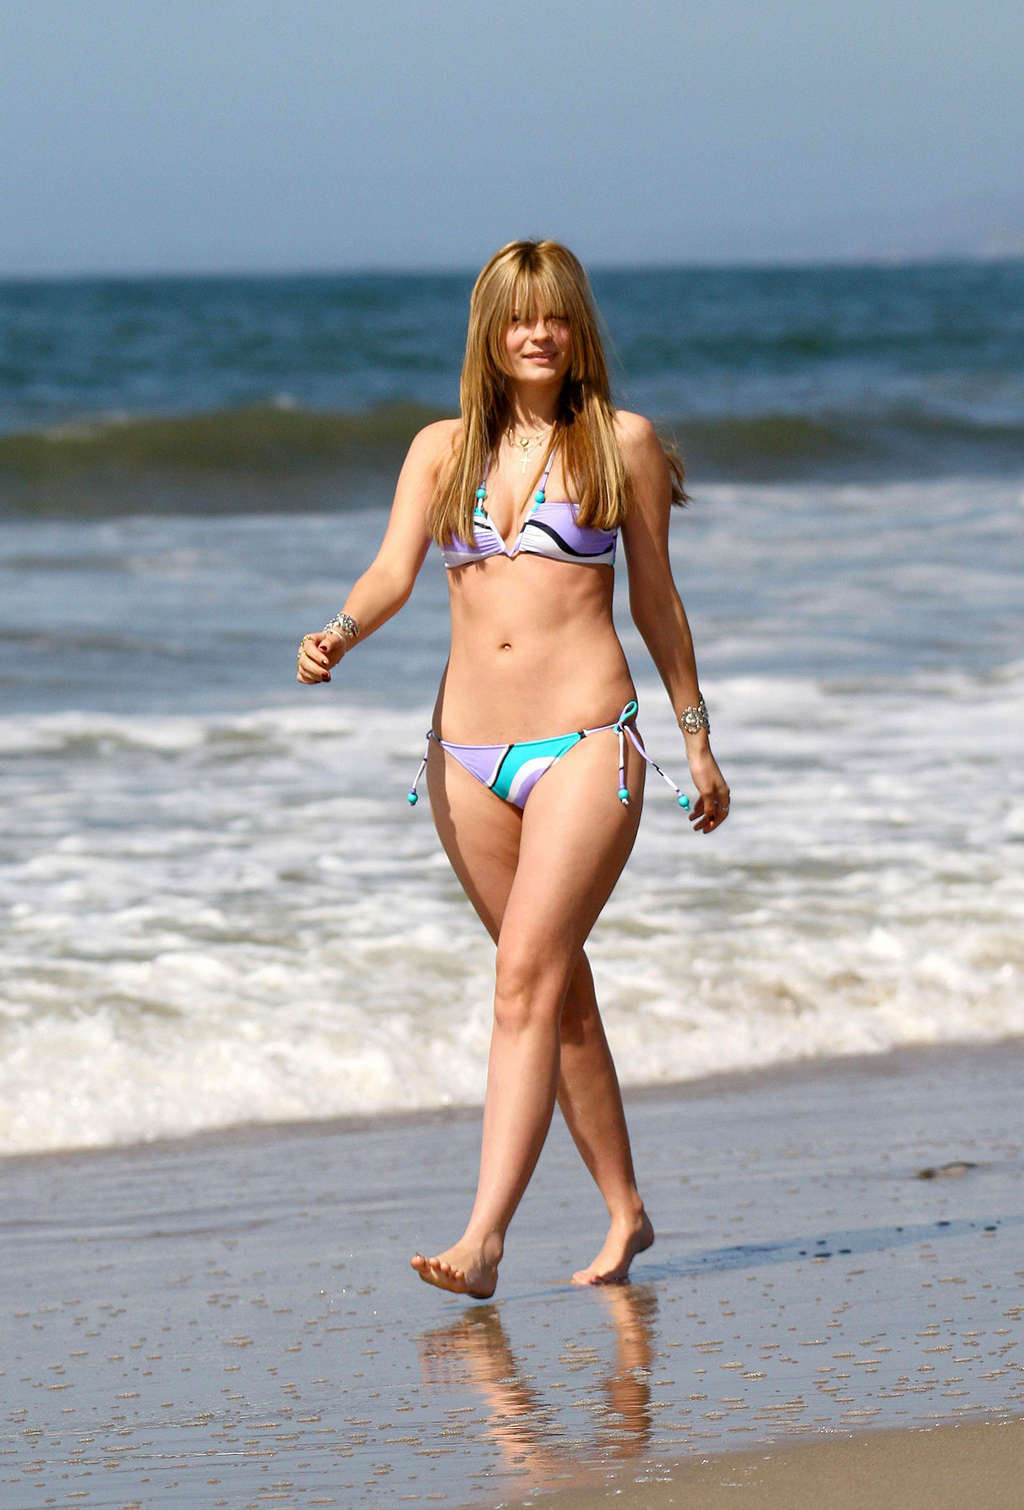 Mischa Barton enjoying on beach and showing extremely sexy body in bikini #75375128